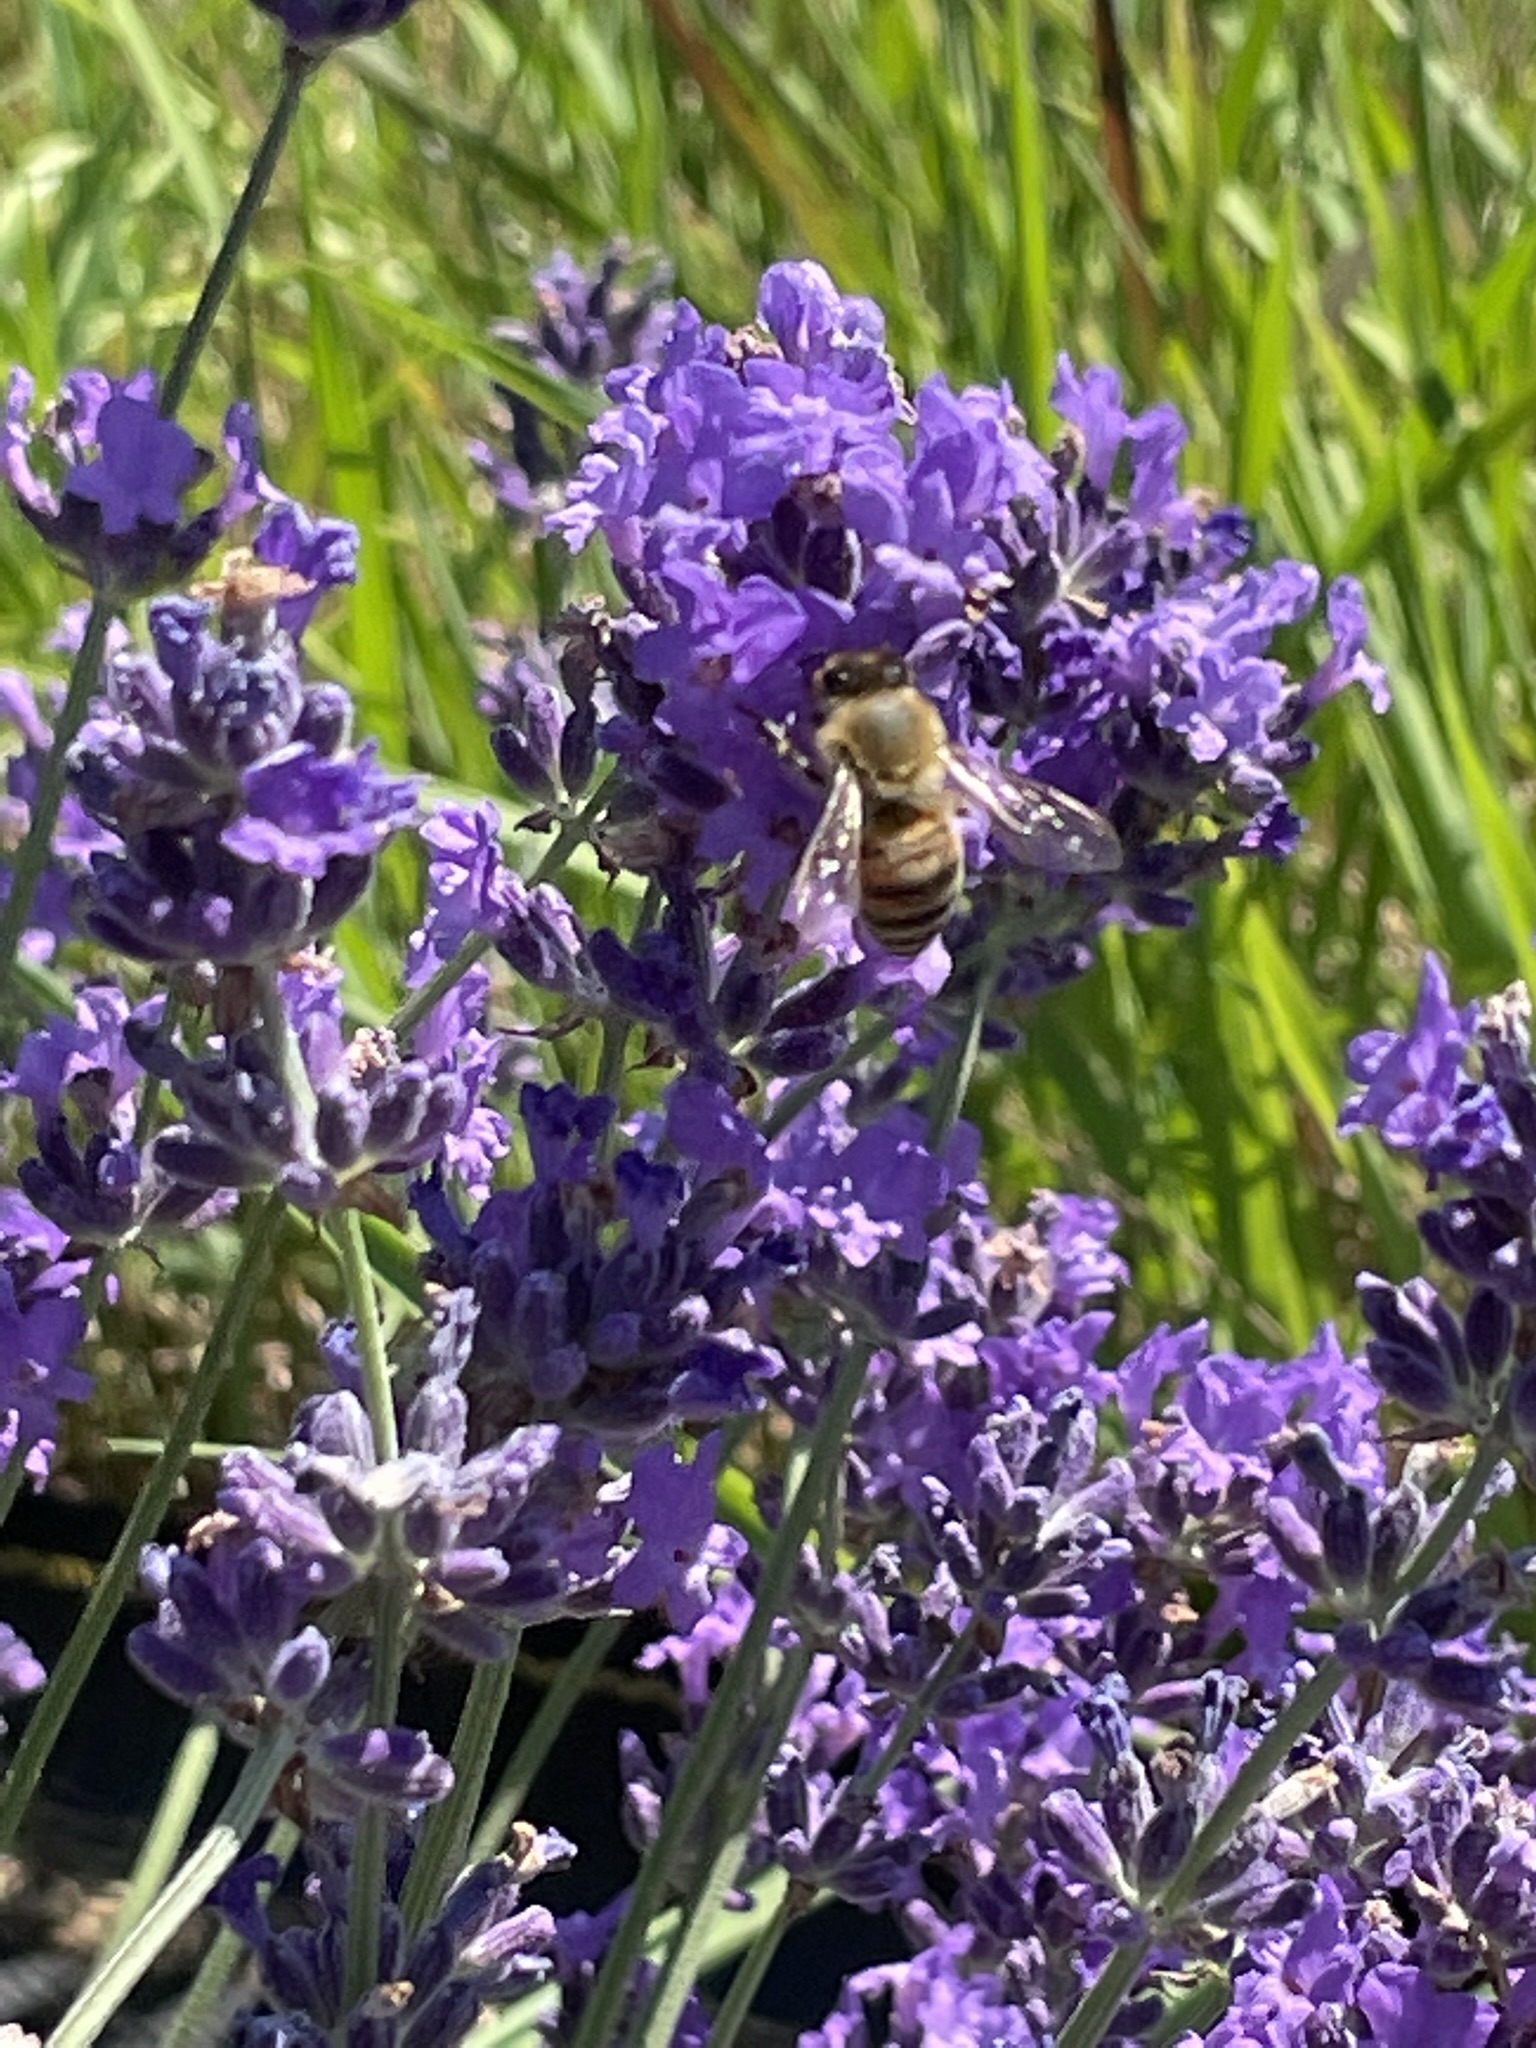 Honey bee on lavender